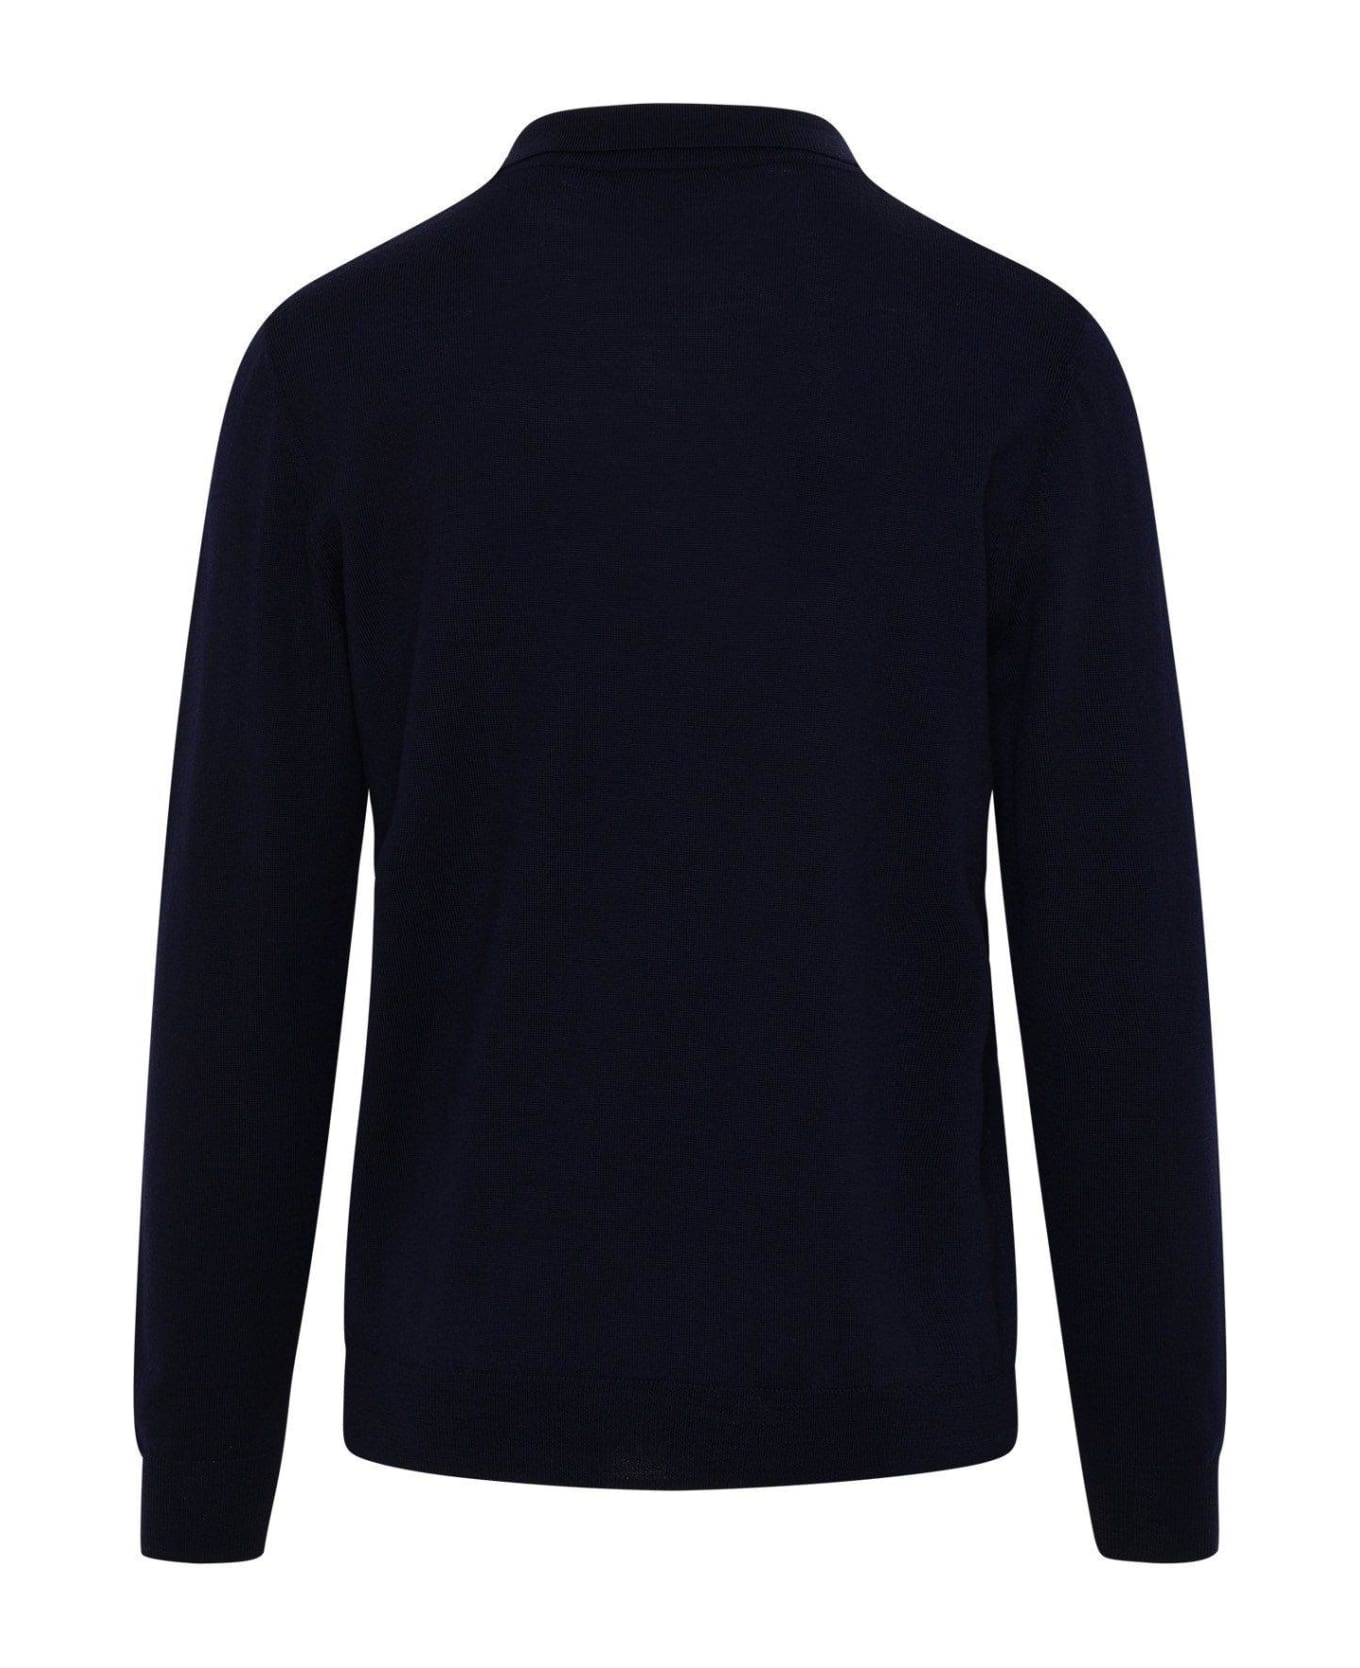 A.P.C. Long-sleeved Polo Shirt - Blu